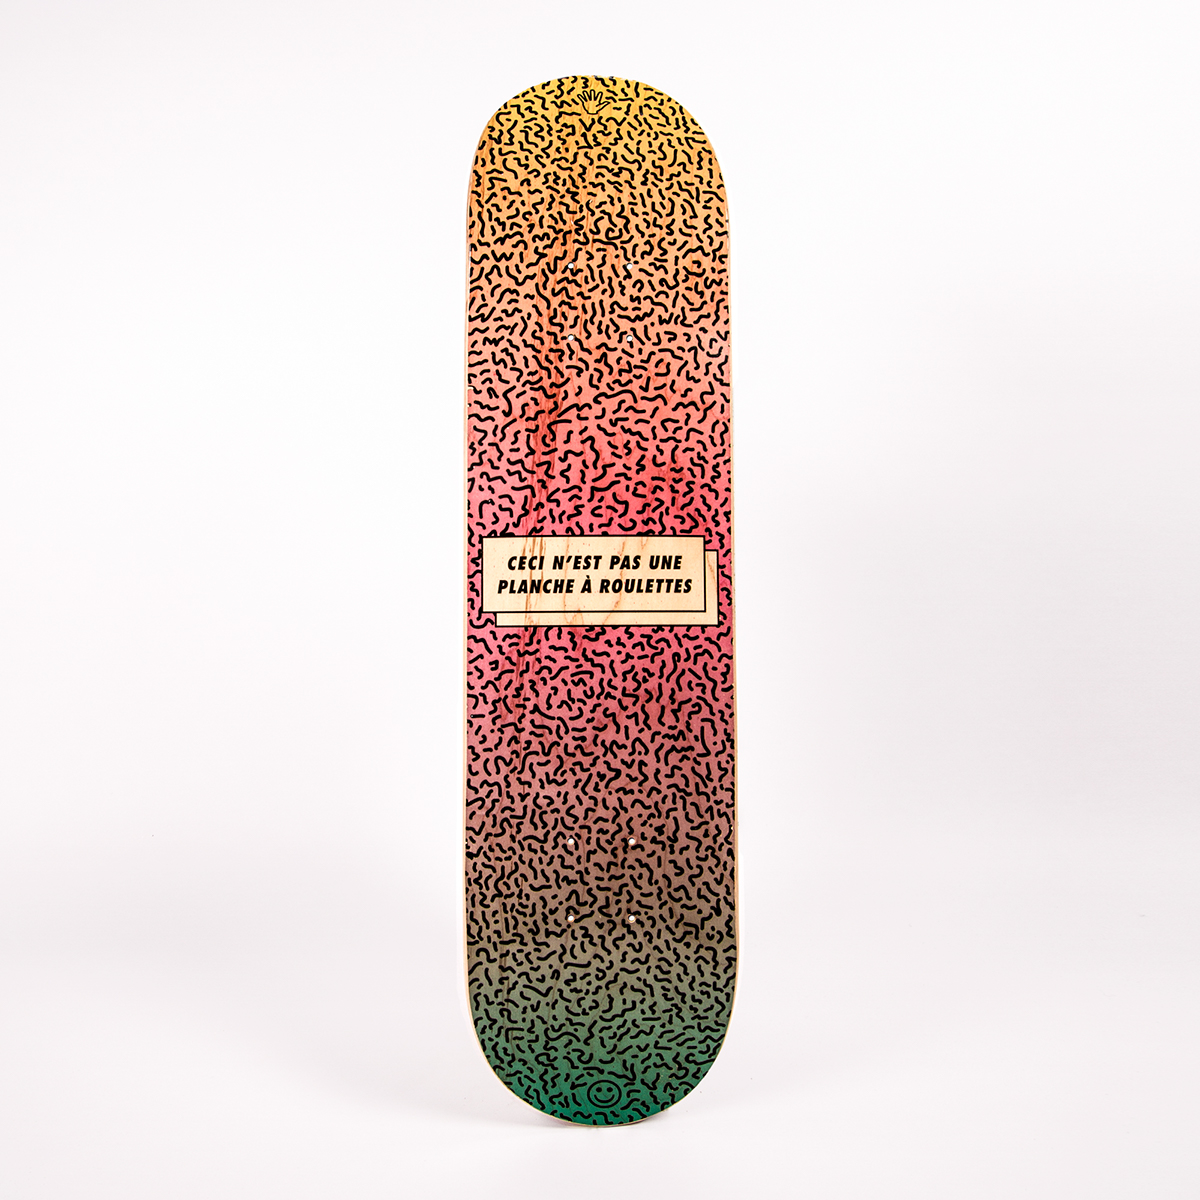 berlin skateboarding boards Corporate Design